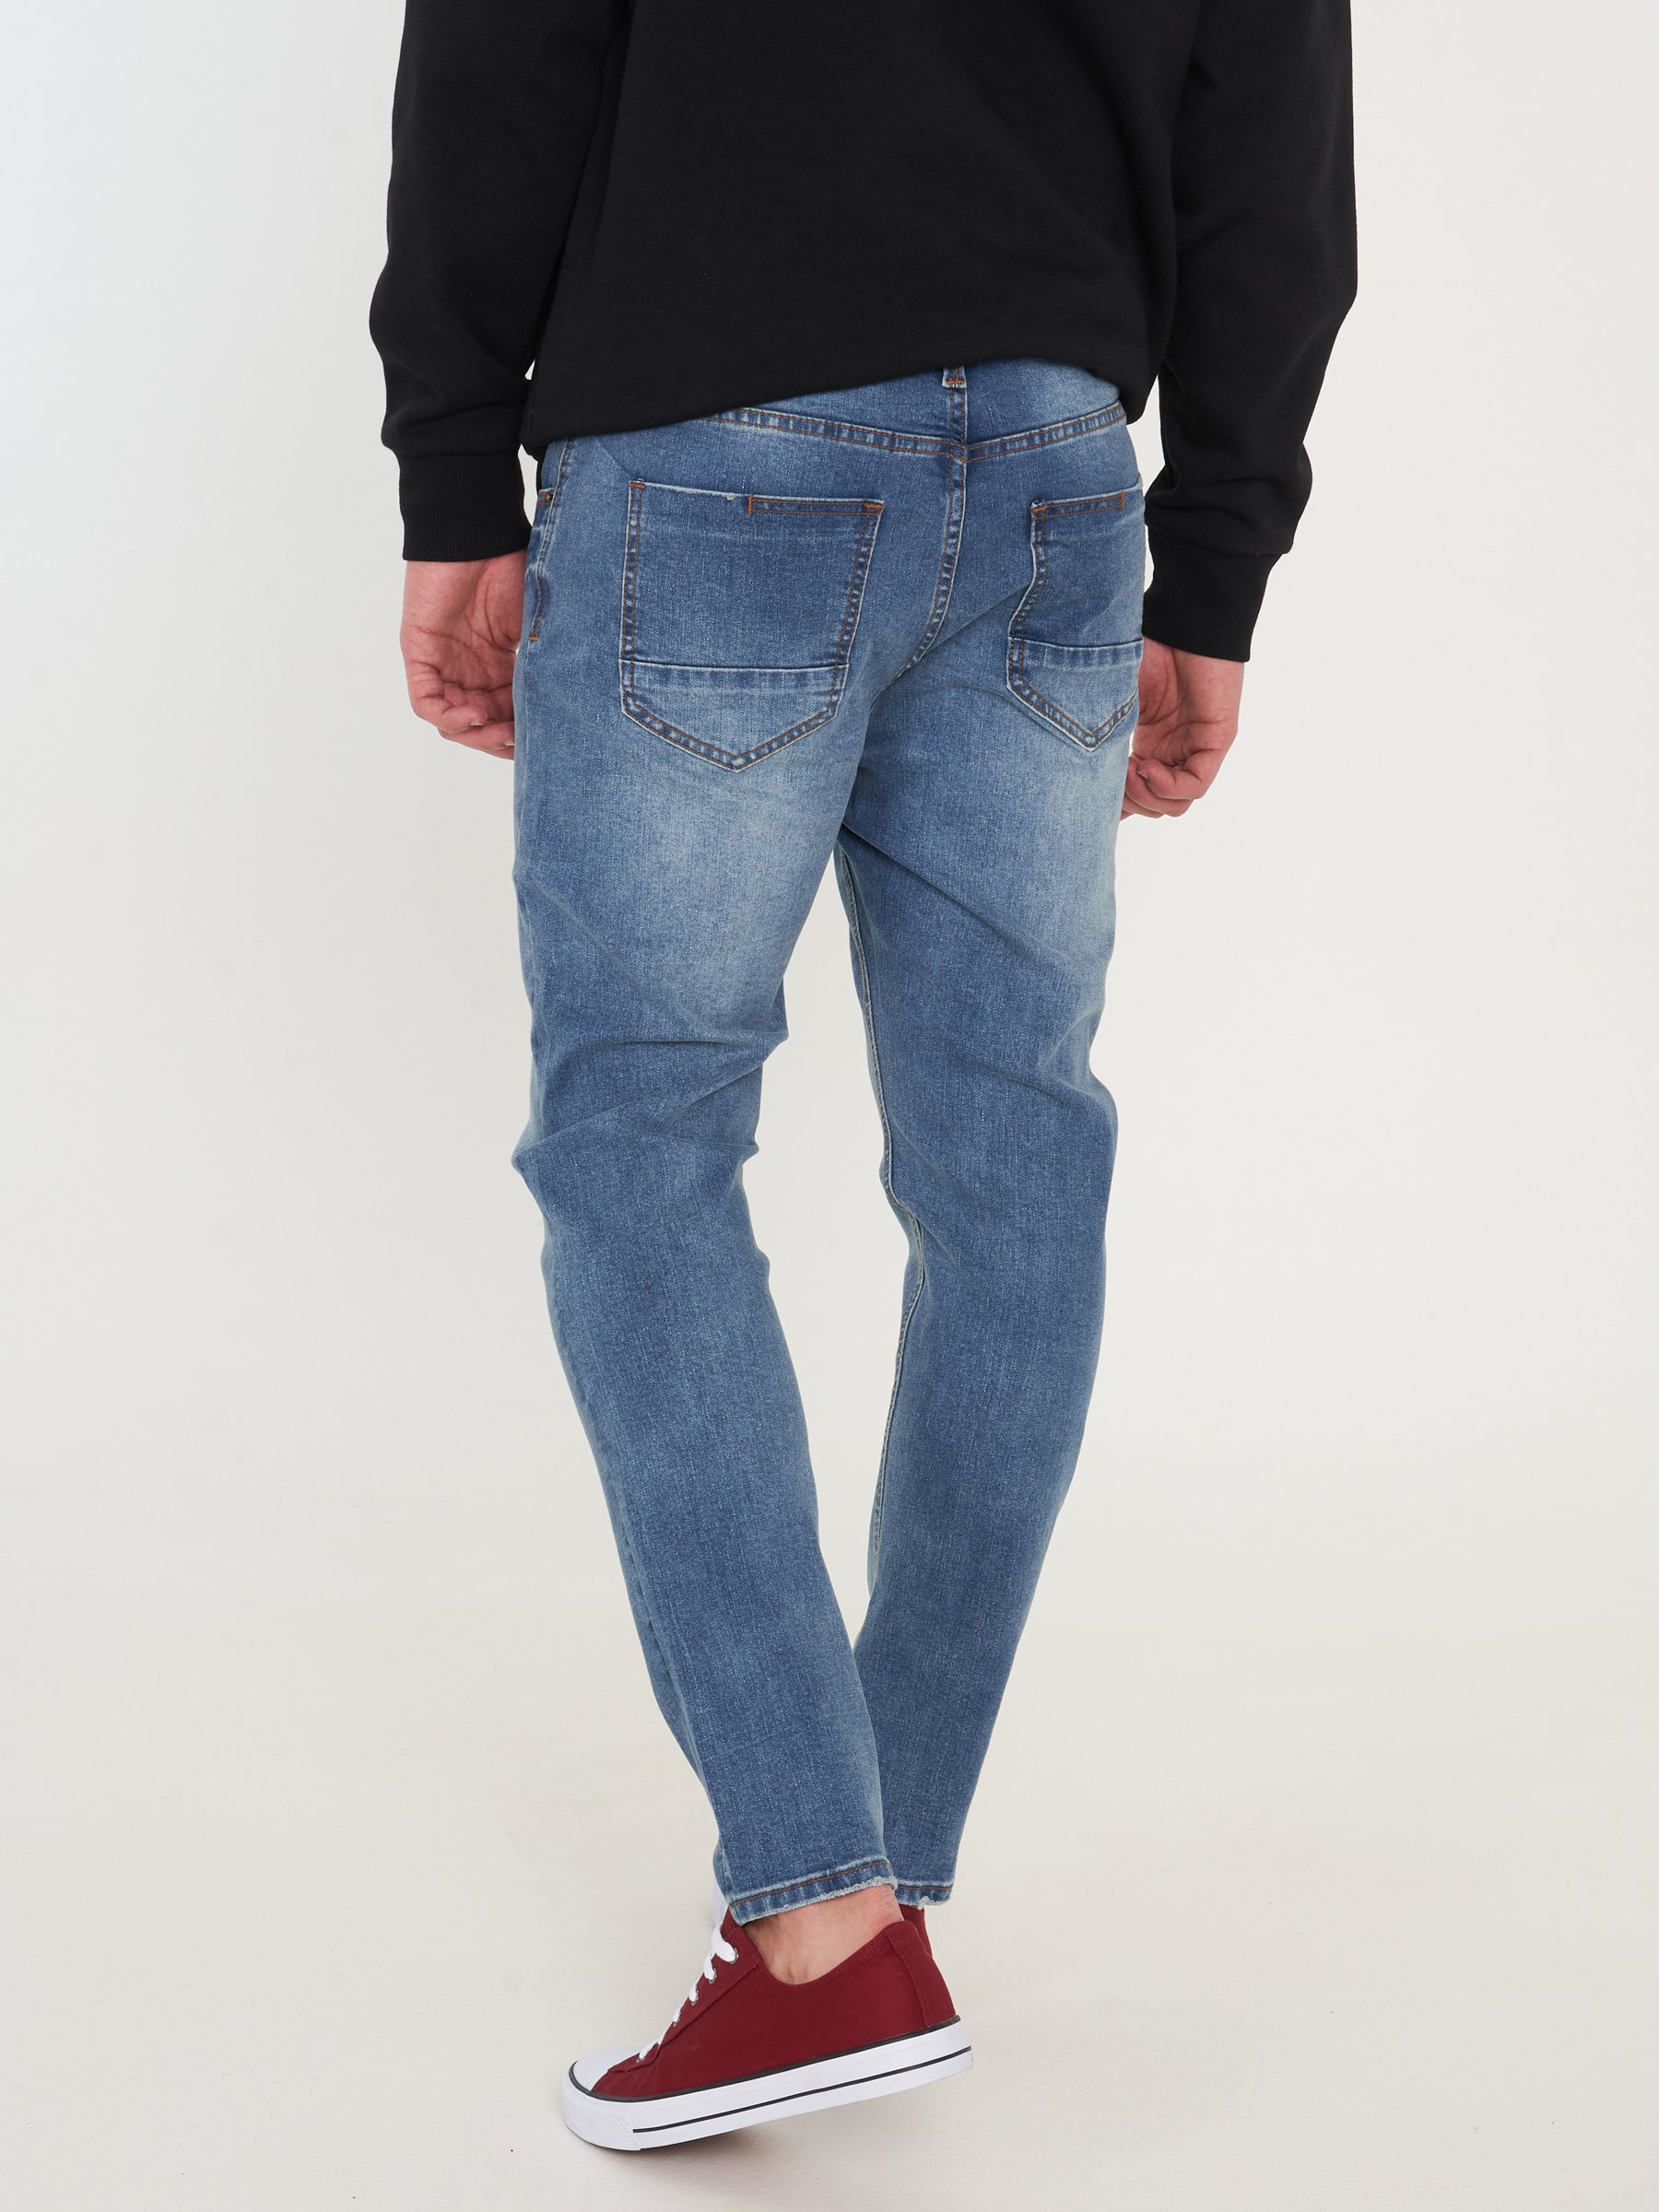 discount 85% Springfield Jeggings & Skinny & Slim MEN FASHION Jeans Worn-in Blue 32                  EU 